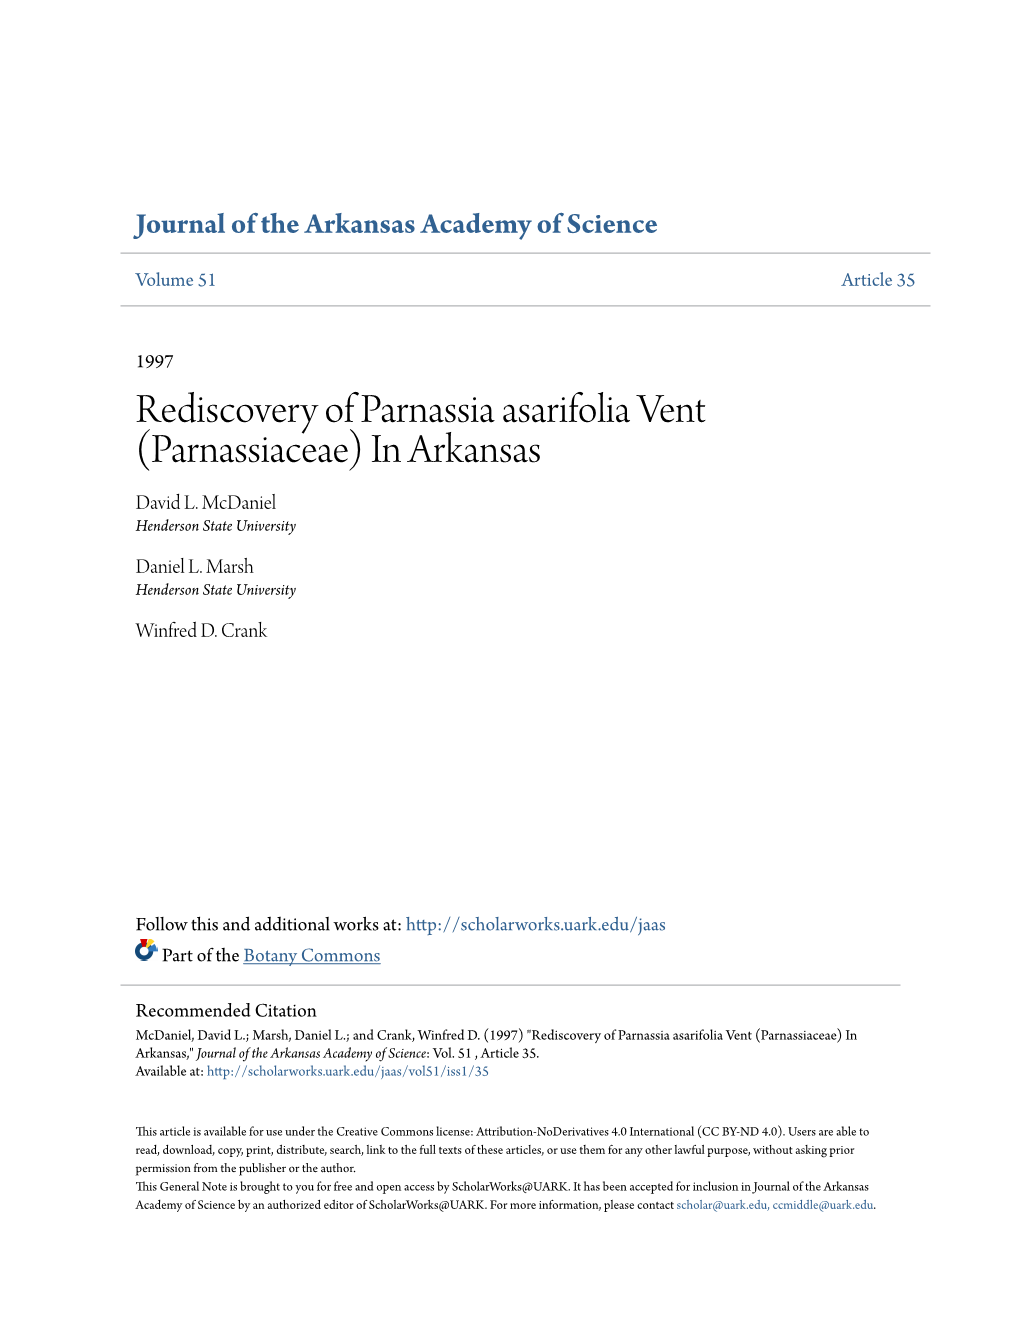 Rediscovery of Parnassia Asarifolia Vent (Parnassiaceae) in Arkansas David L